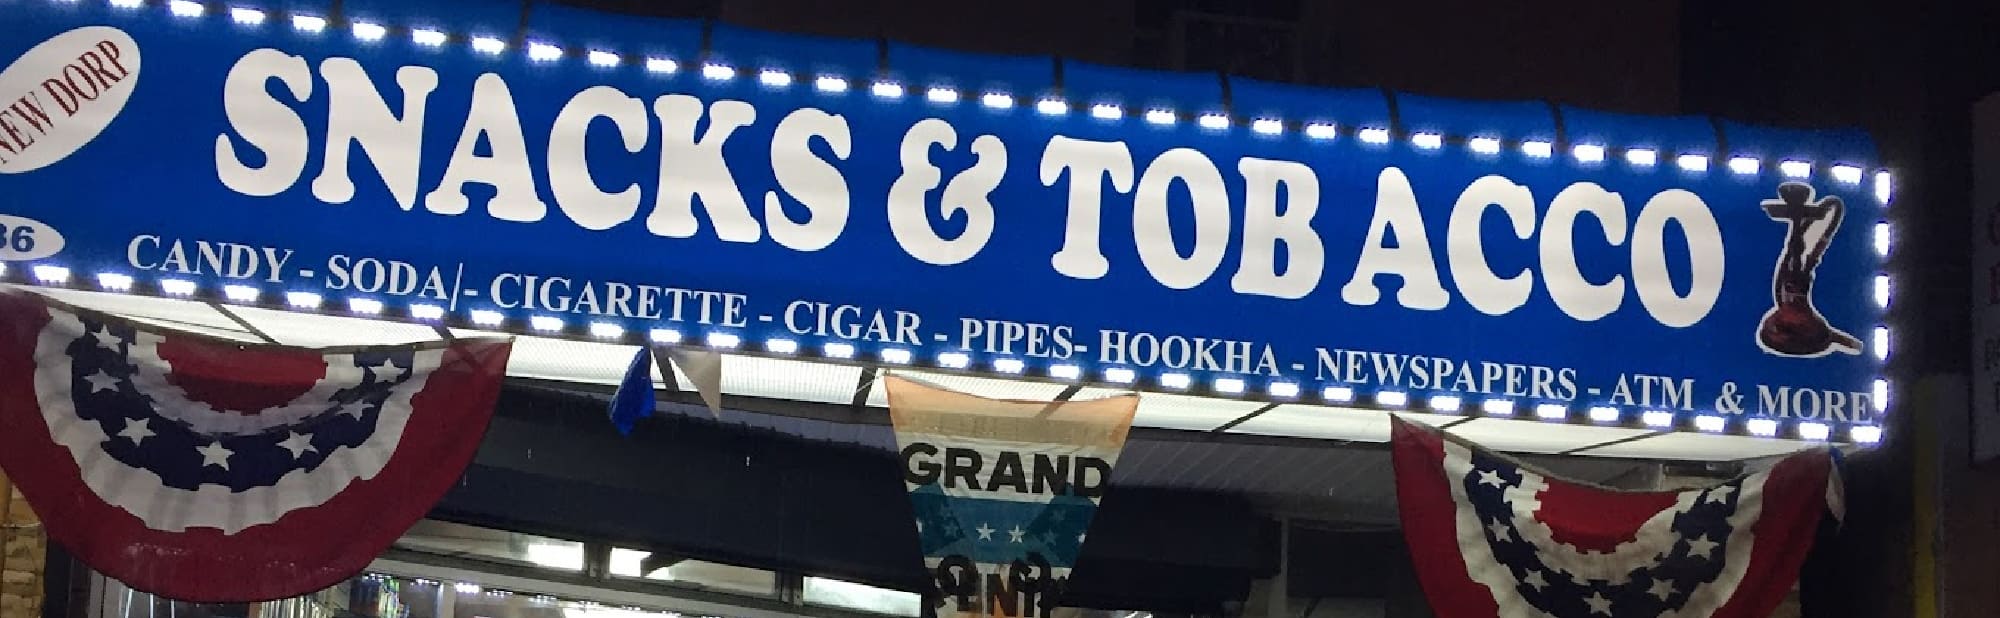 image of smoke shop & tobacco in staten island ny